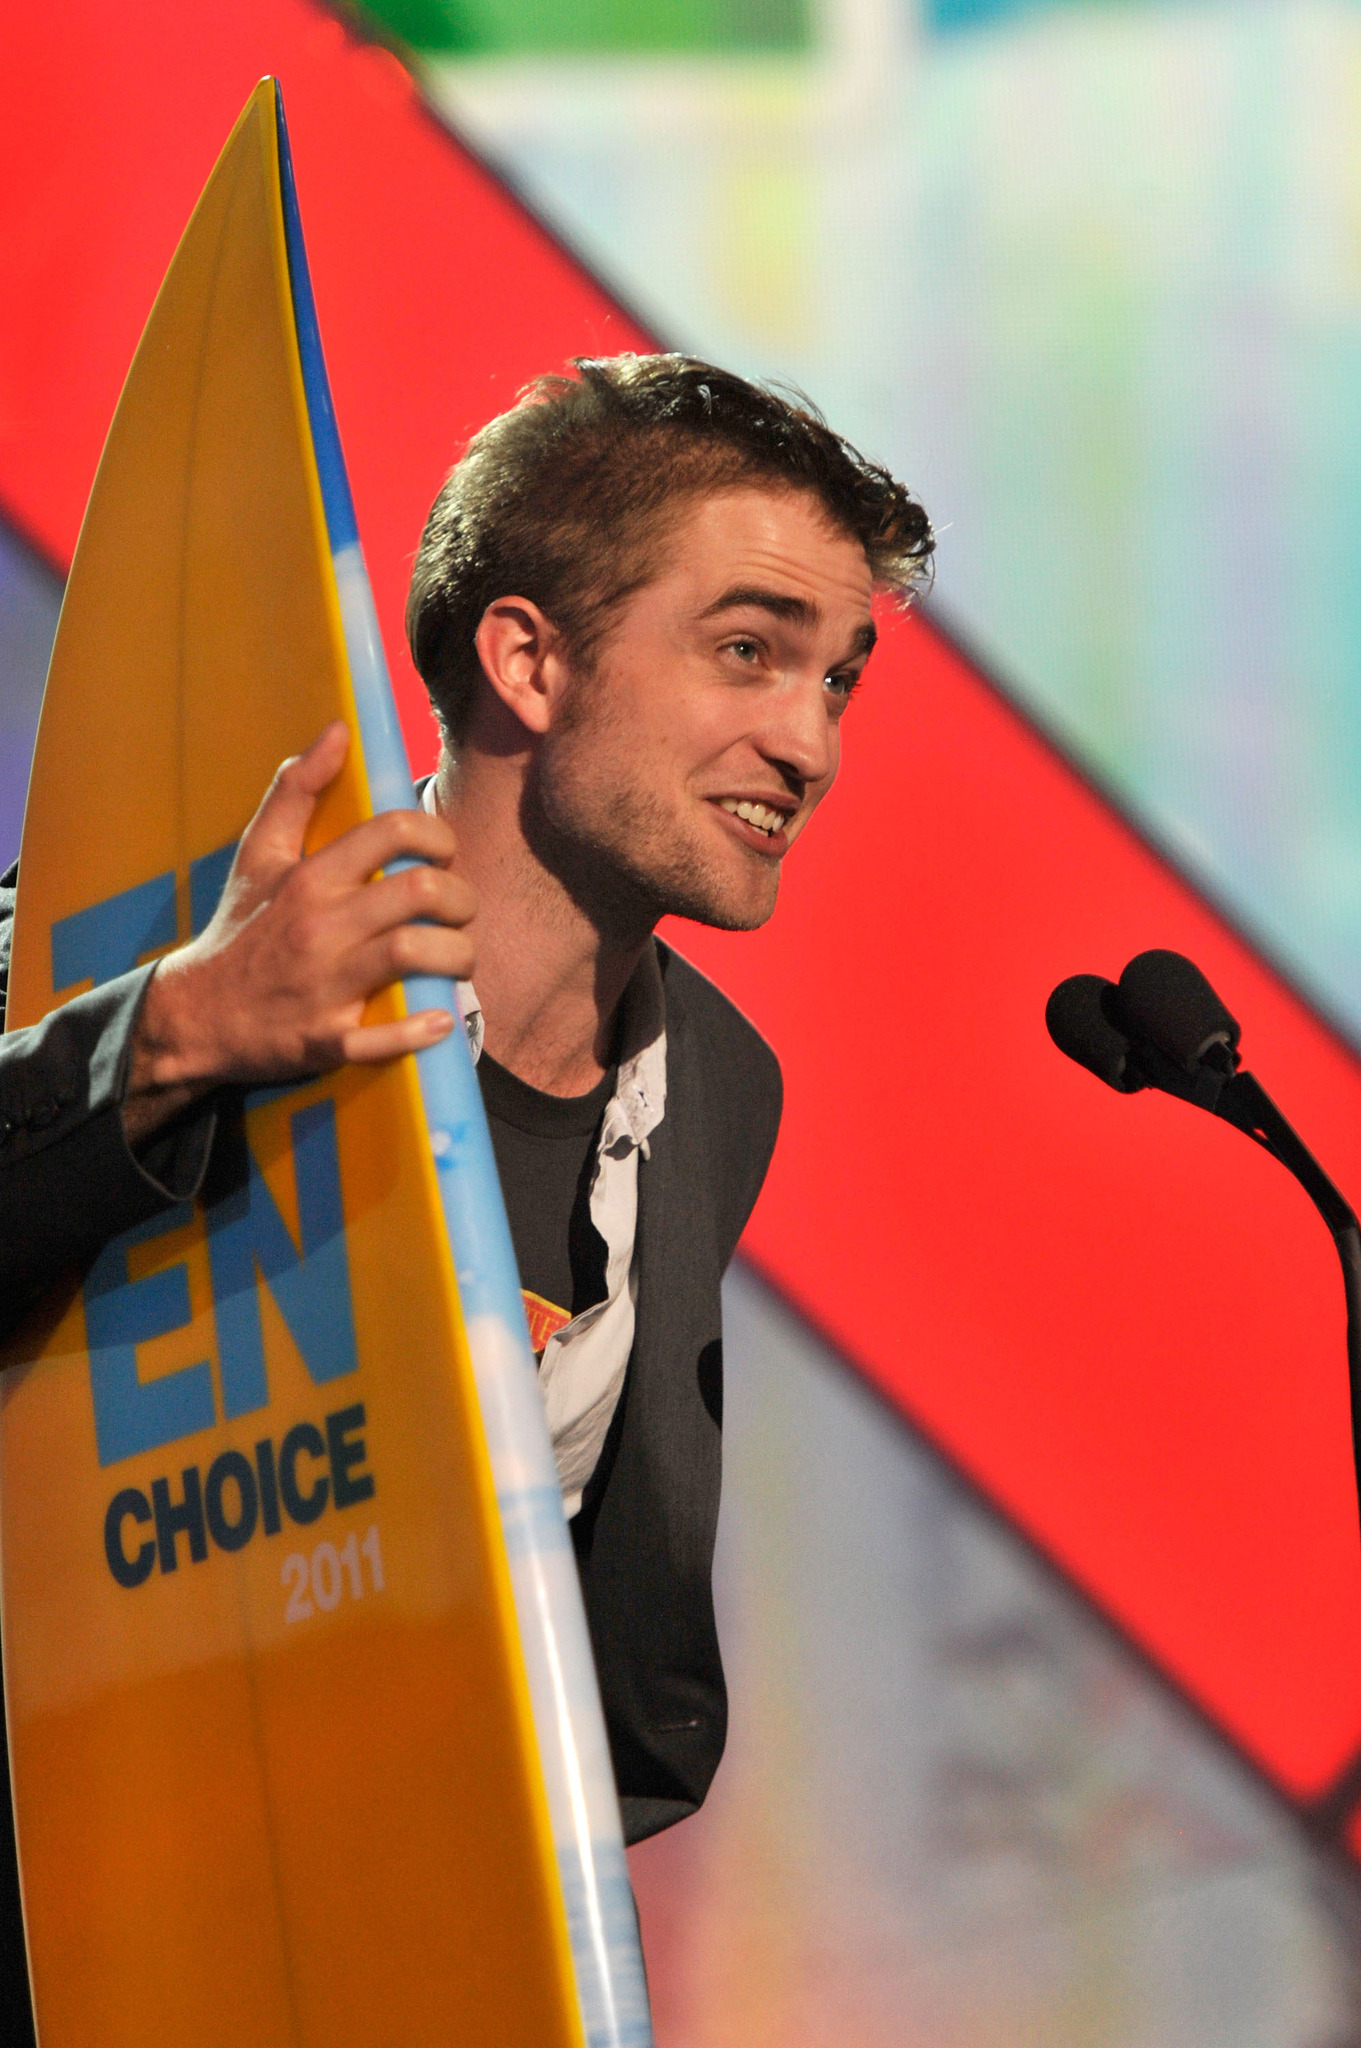 Robert Pattinson at event of Teen Choice 2011 (2011)